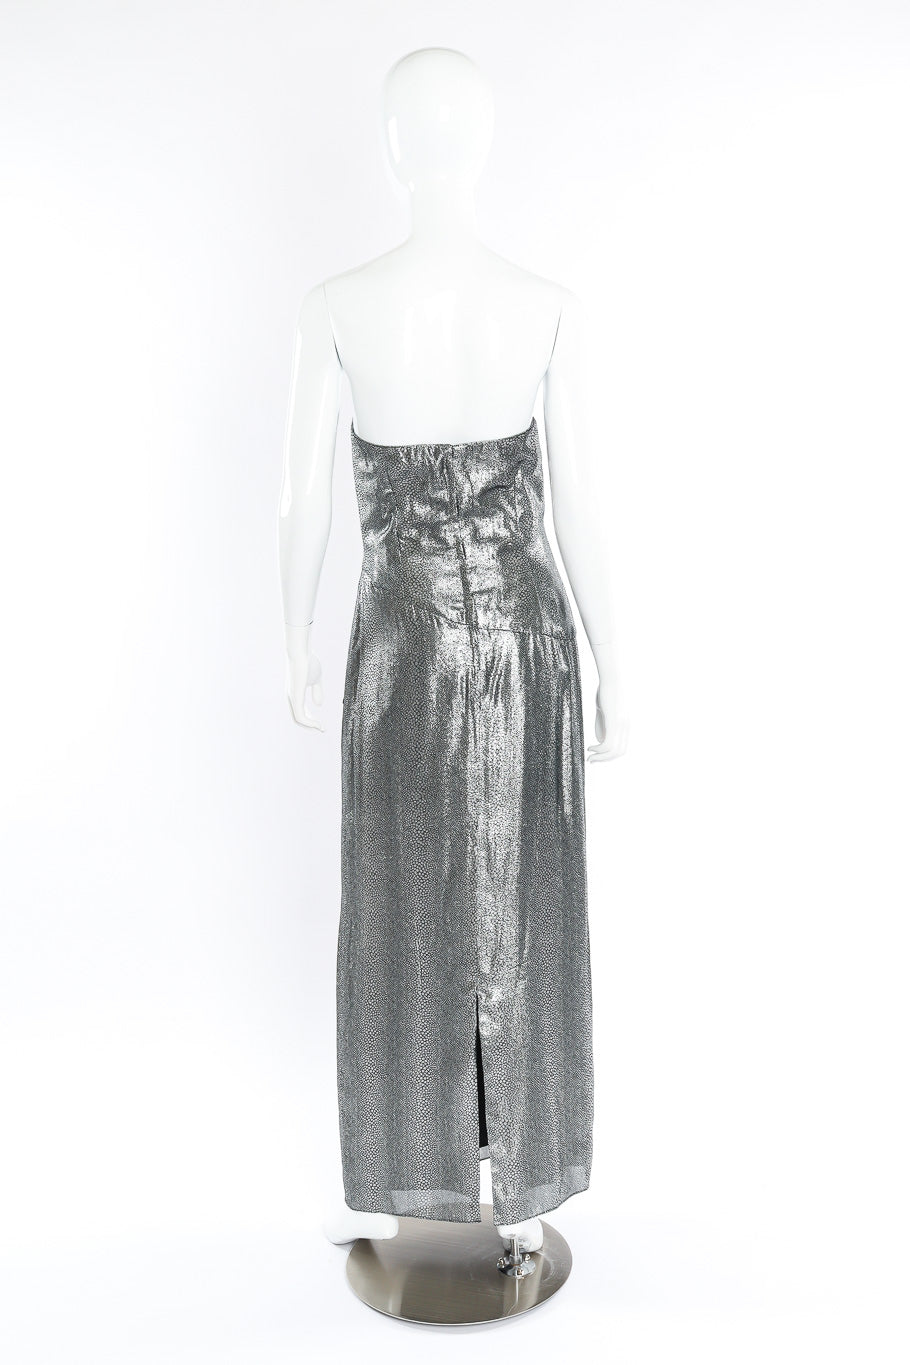 Metallic dress by Tracy Mills on mannequin back @recessla